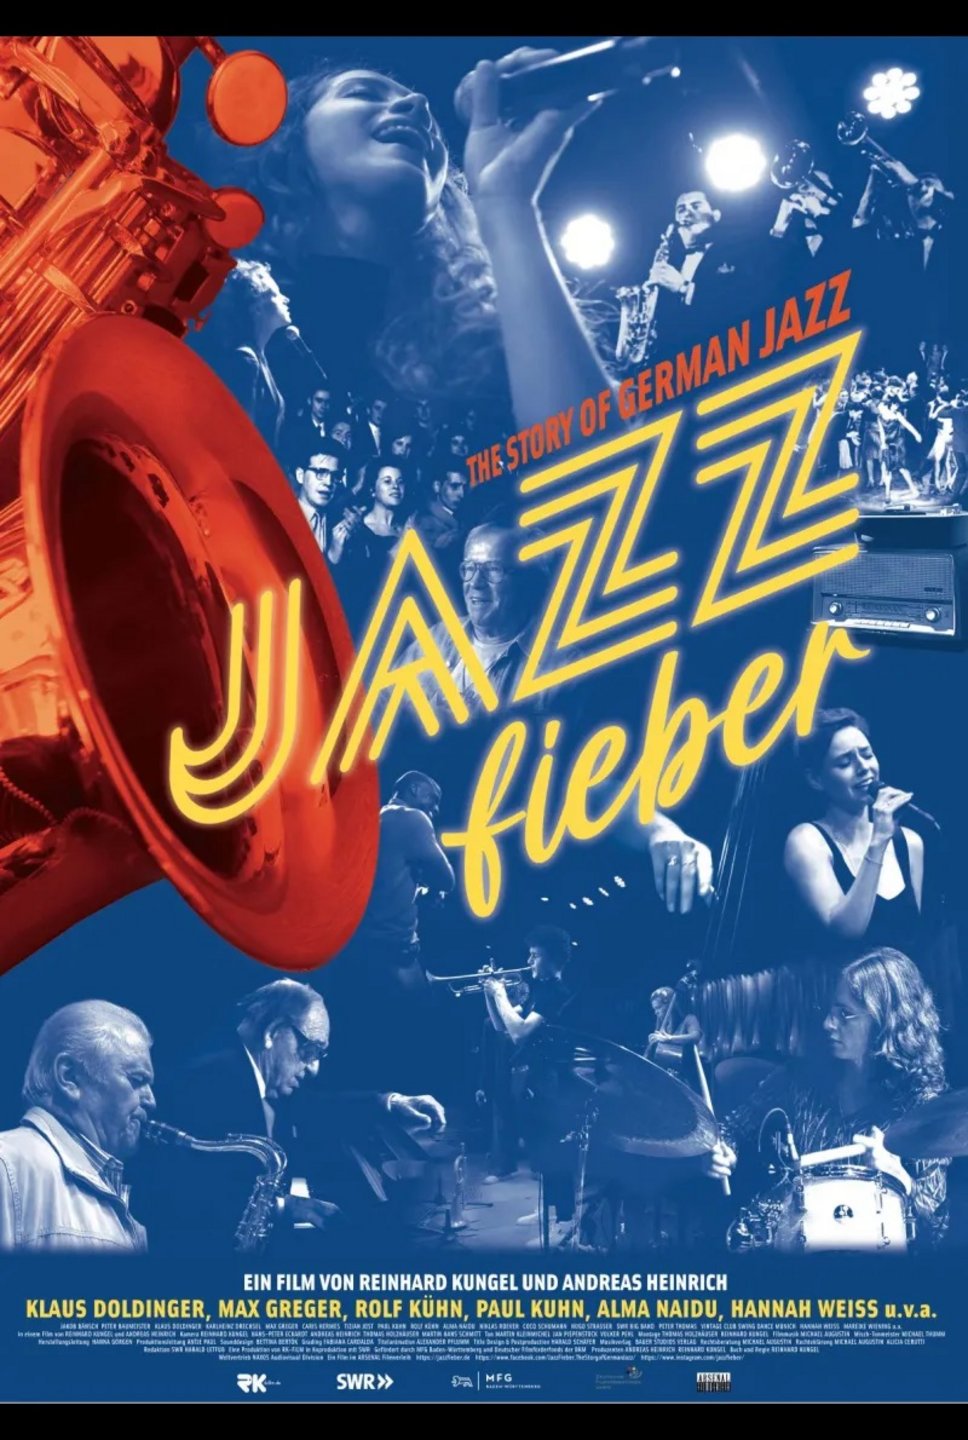 filmkunst66: Jazzfieber – The Story of German Jazz